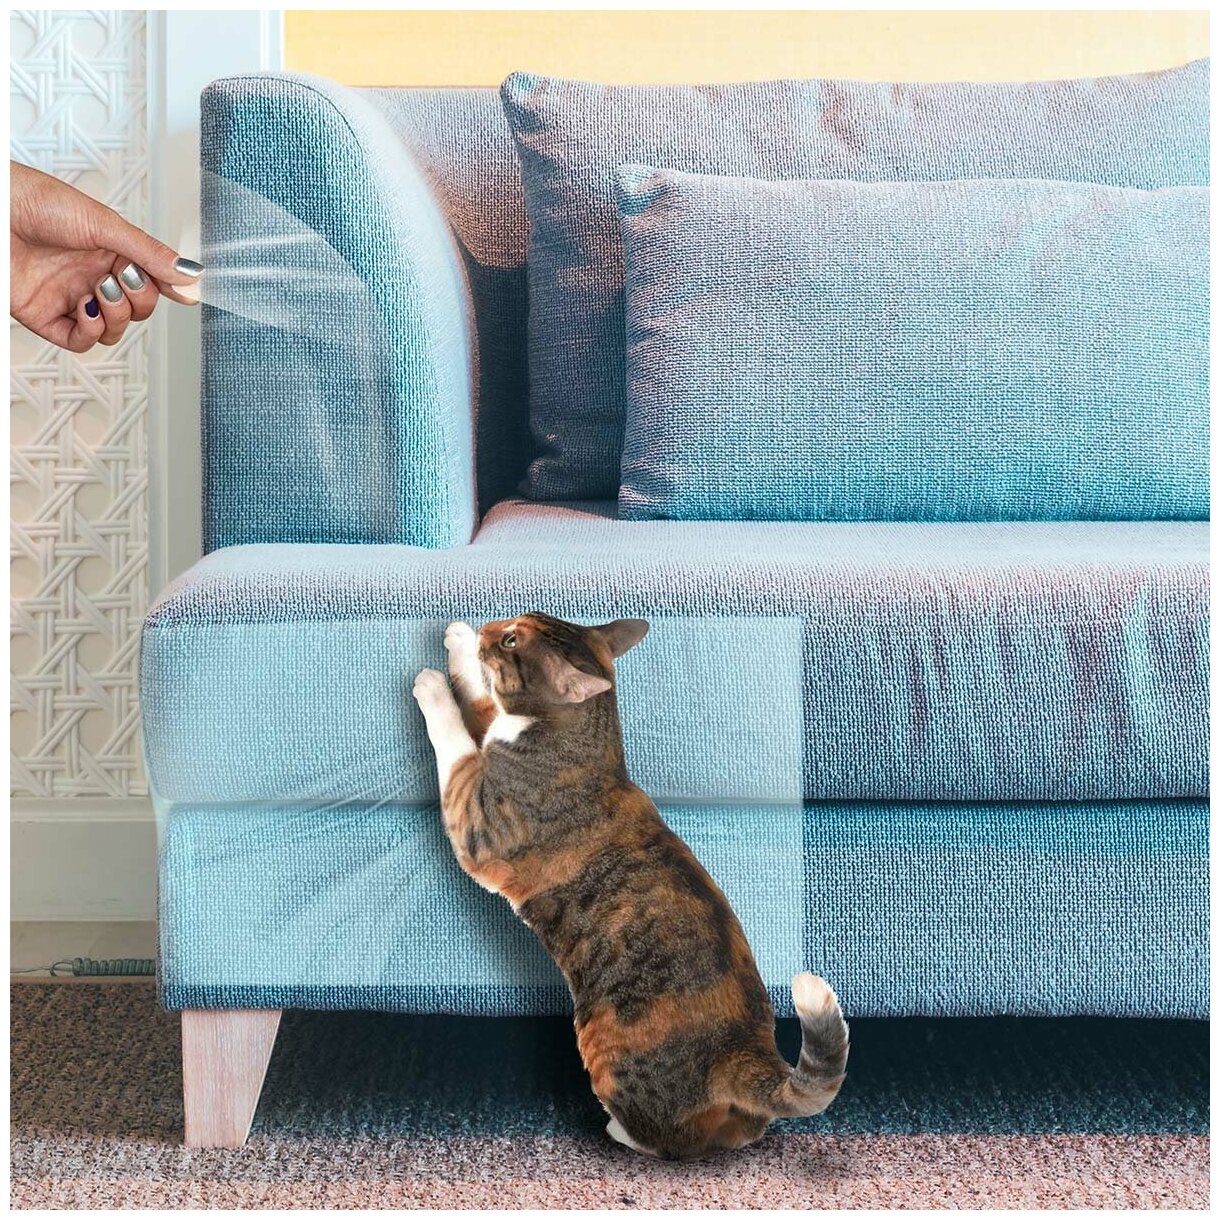 Антицарапка когтеточка защитная пленка от царапин VEROL, самоклеящаяся пленка защитная для дивана, мебели, обоев, наклейка для кошек и собак, набор